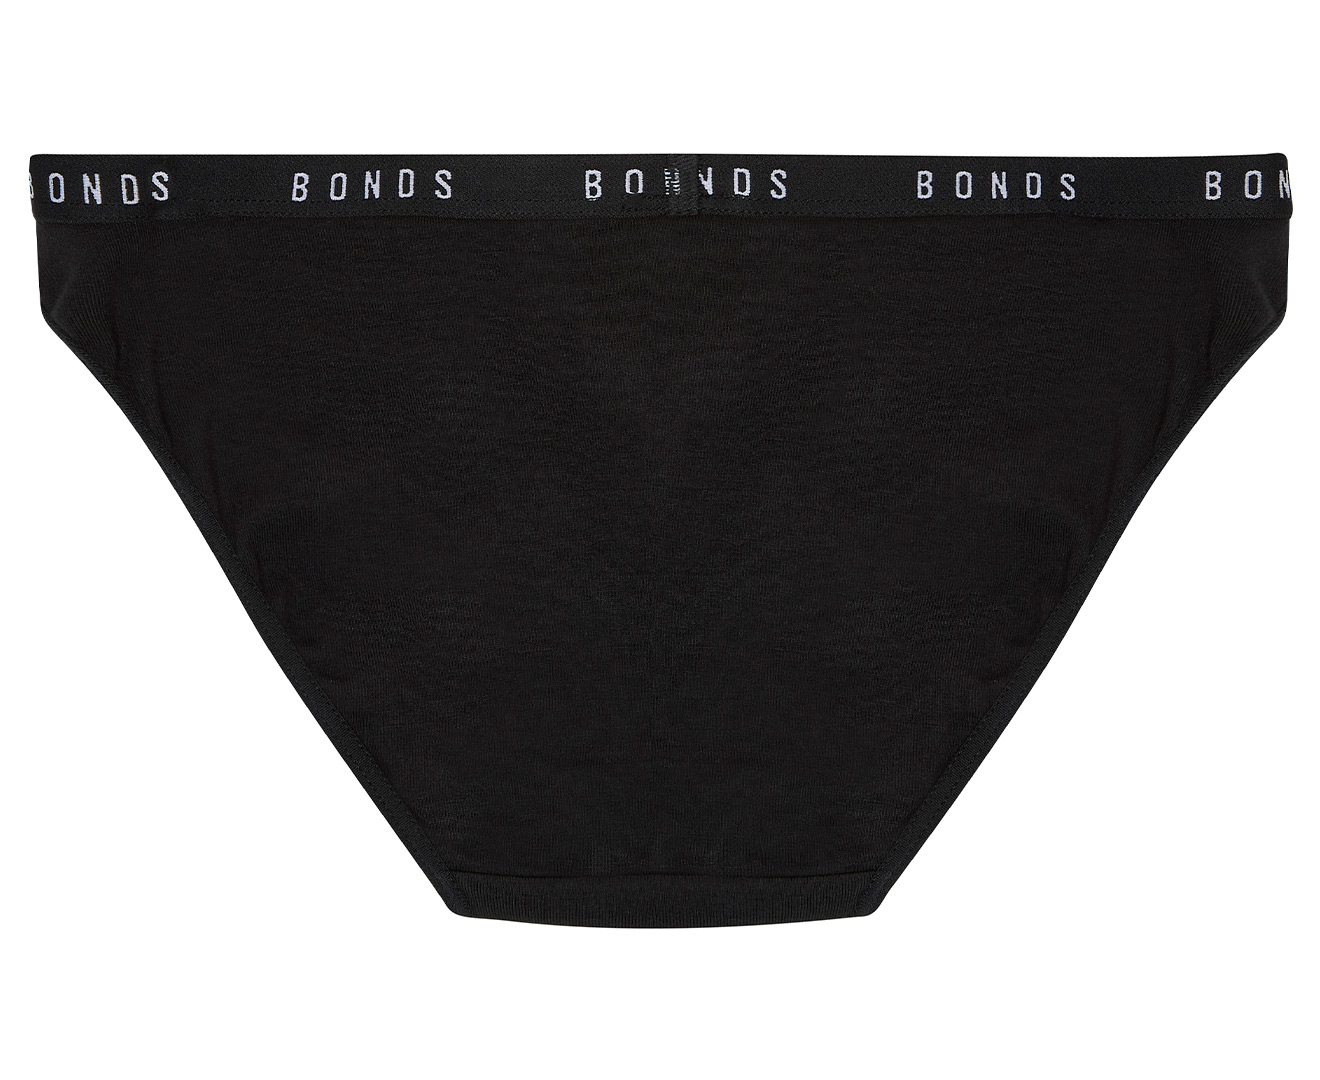 Bonds Youth Girls' Hipster Bikini Briefs 2-Pack - Black/White 